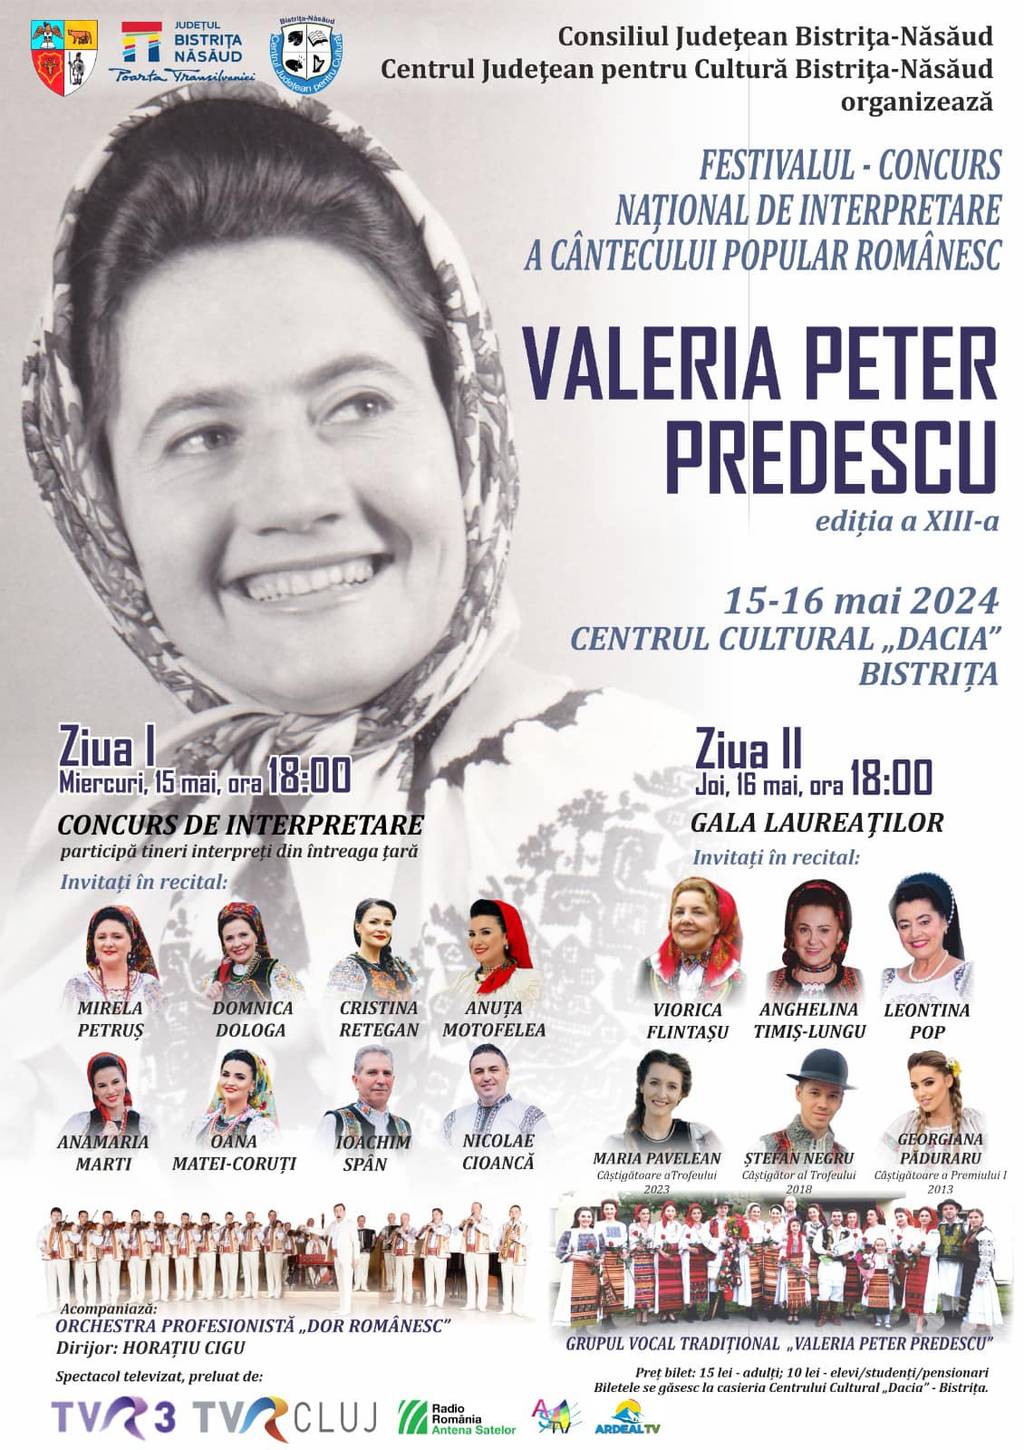 Festival-Concurs "Valeria Peter Predescu"